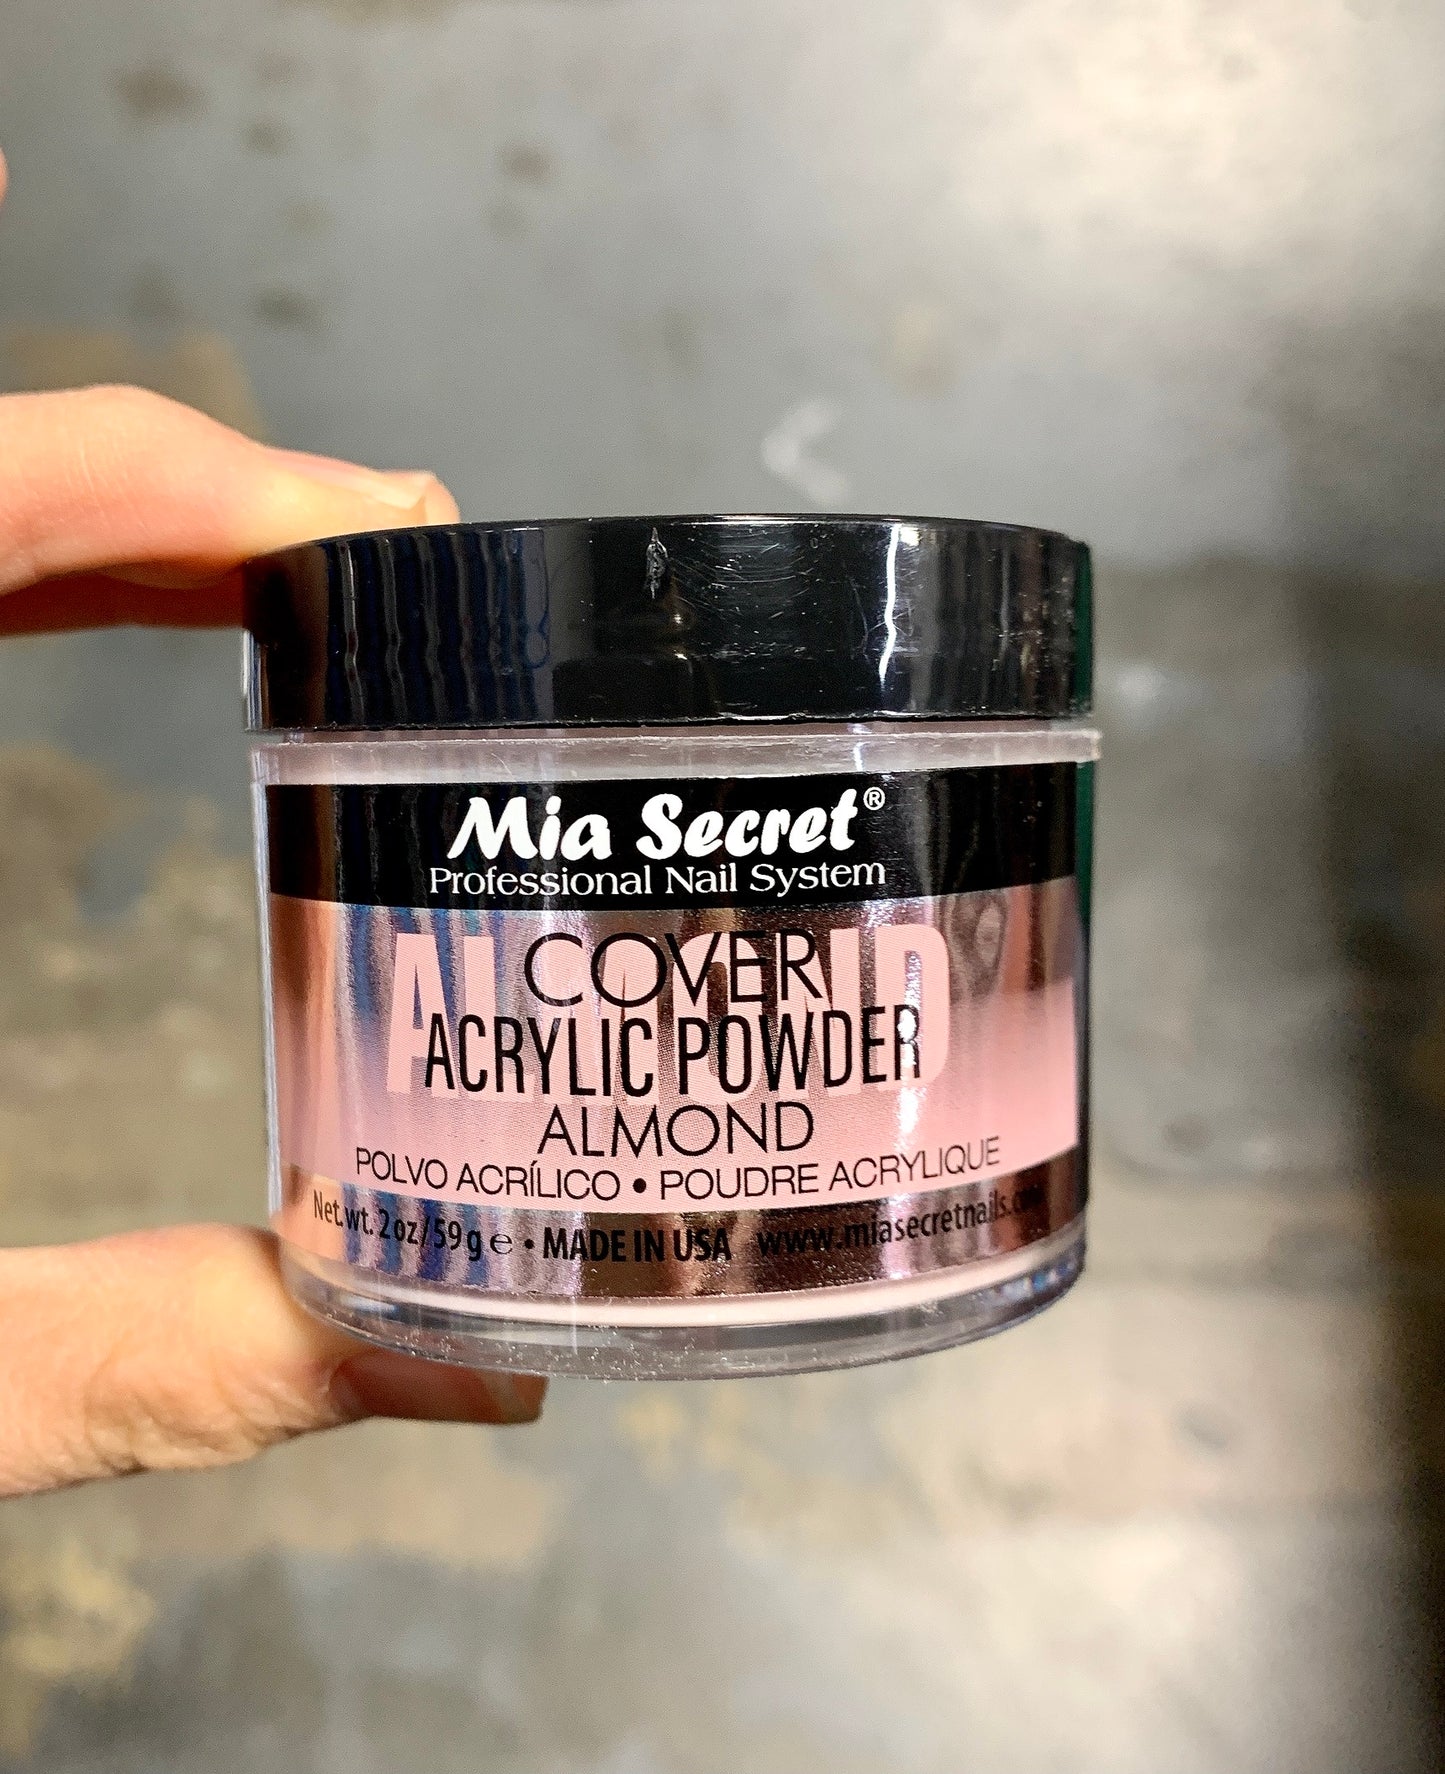 Mia Secret Cover Almond Acrylic Powder 2oz